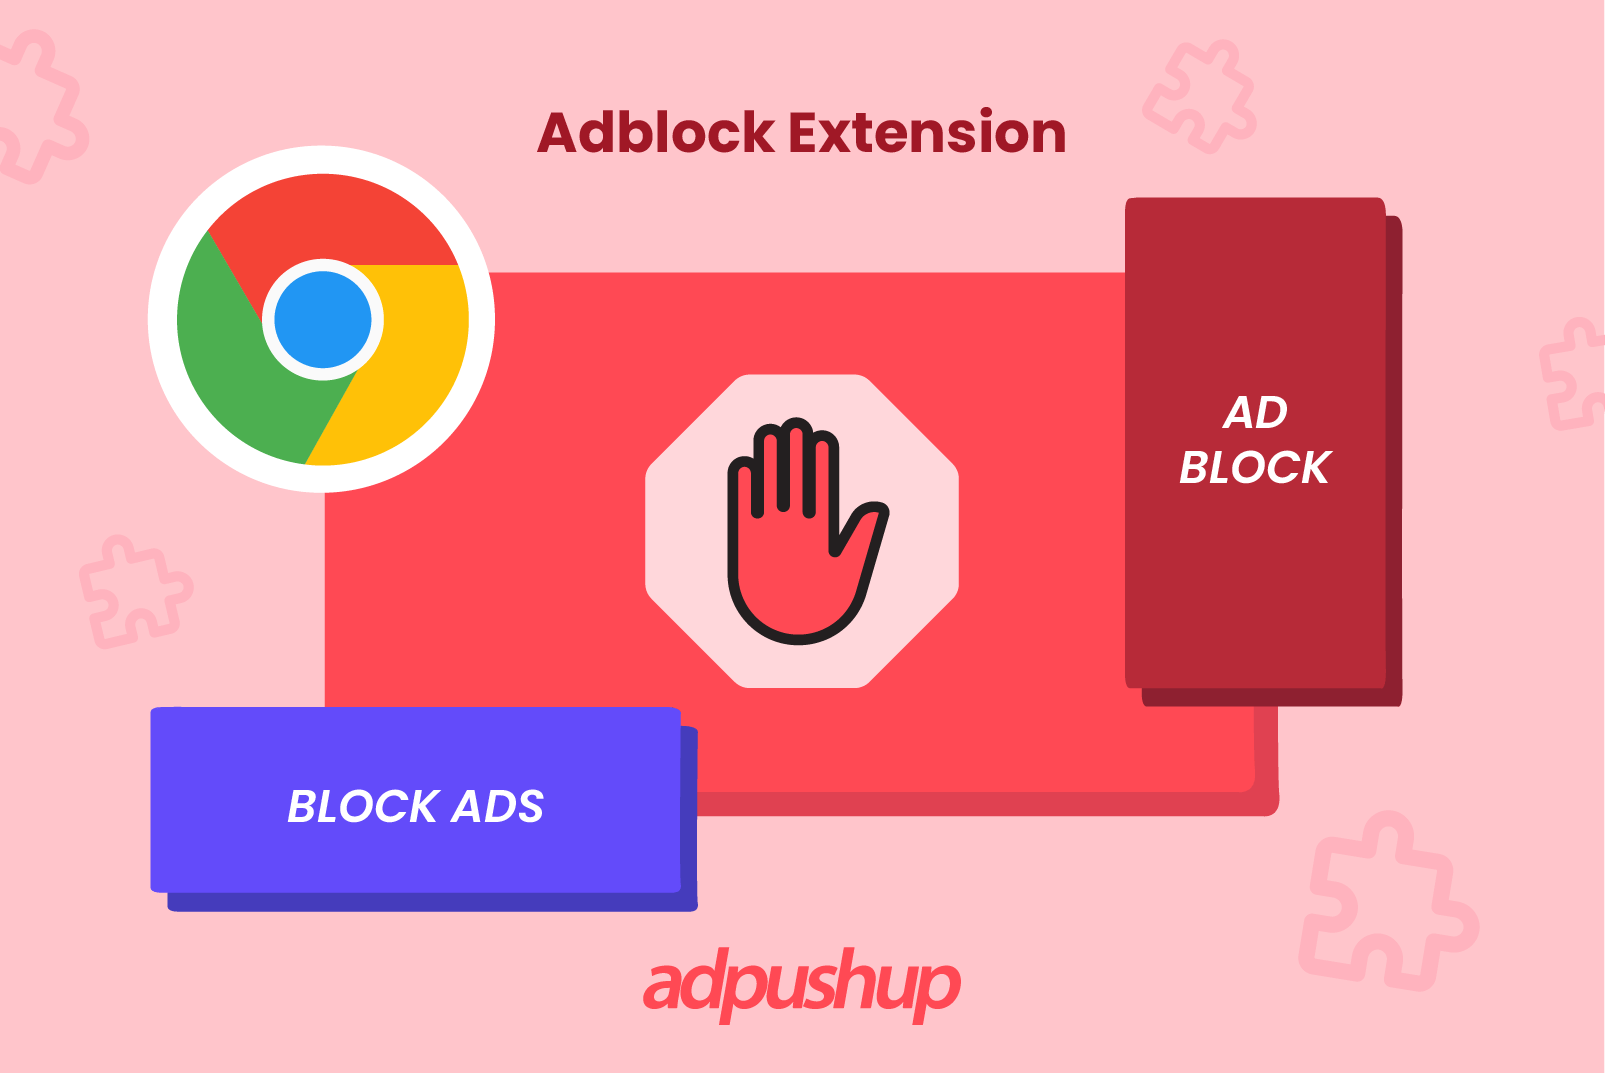 3 Ways to Block Advertisements on Google Chrome